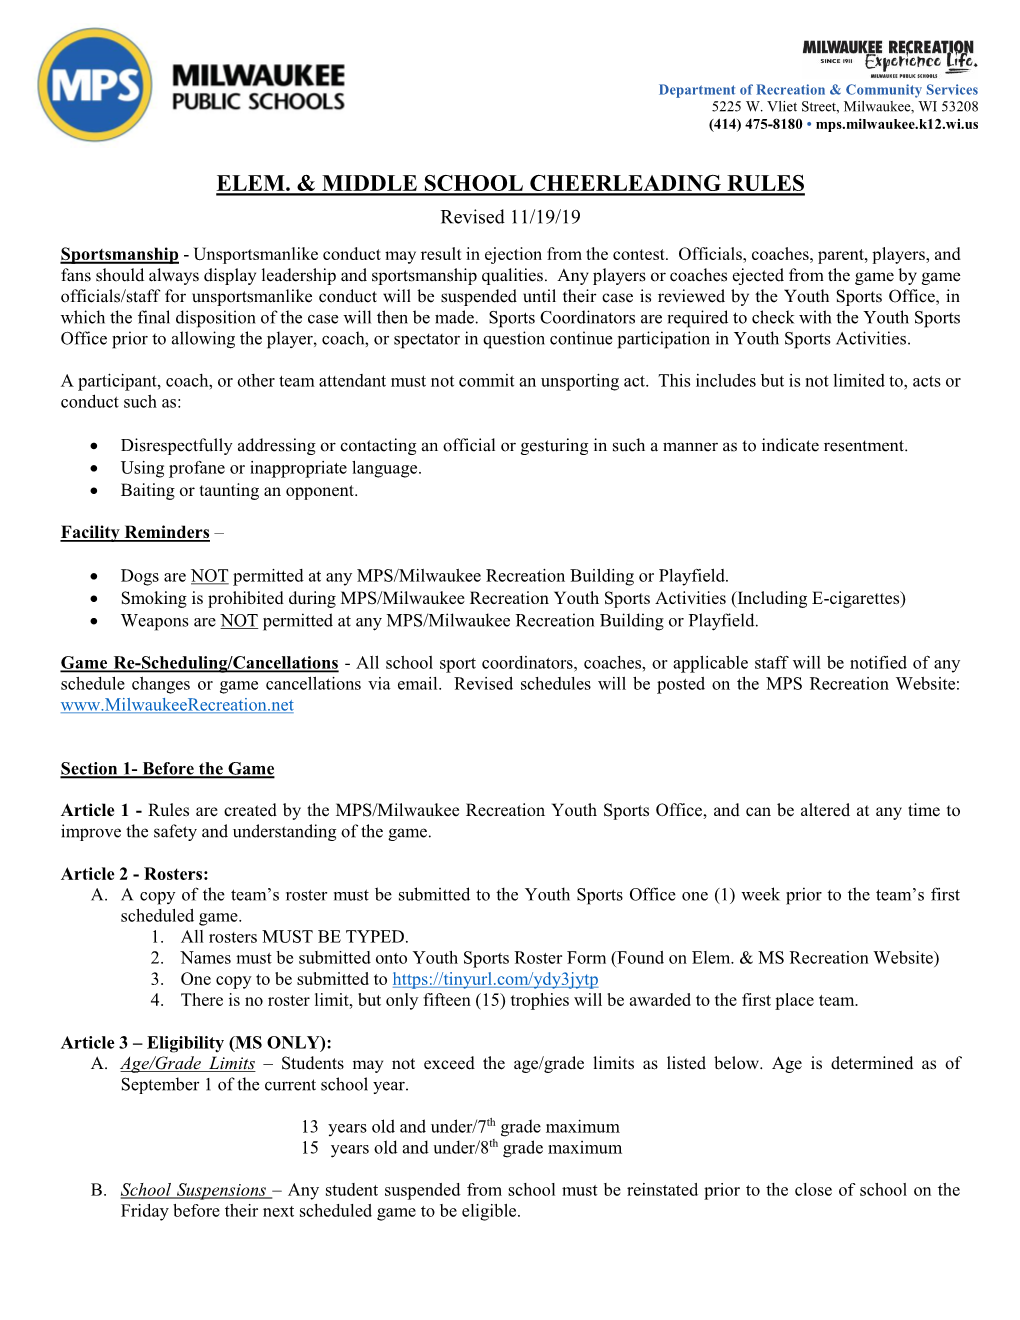 Elem. & Middle School Cheerleading Rules